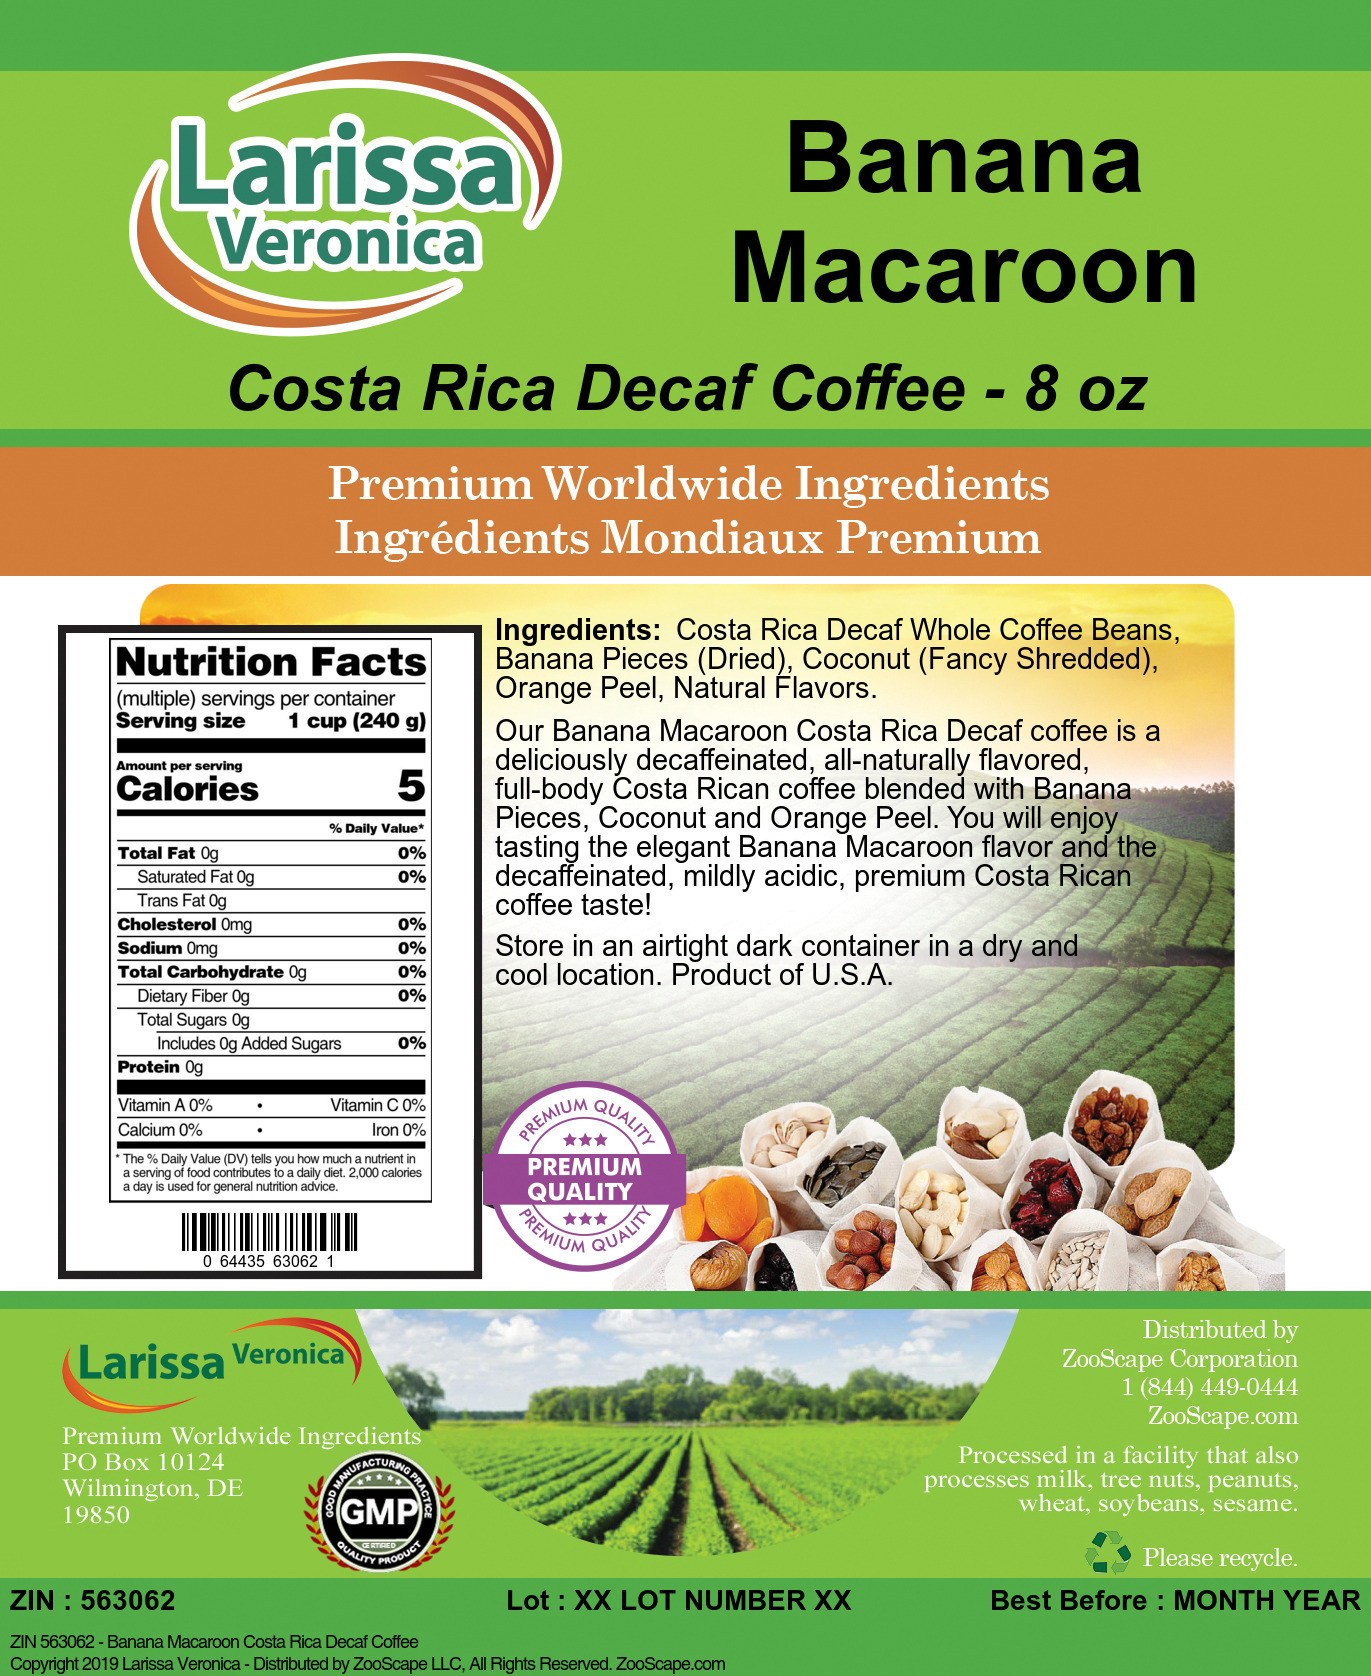 Banana Macaroon Costa Rica Decaf Coffee - Label